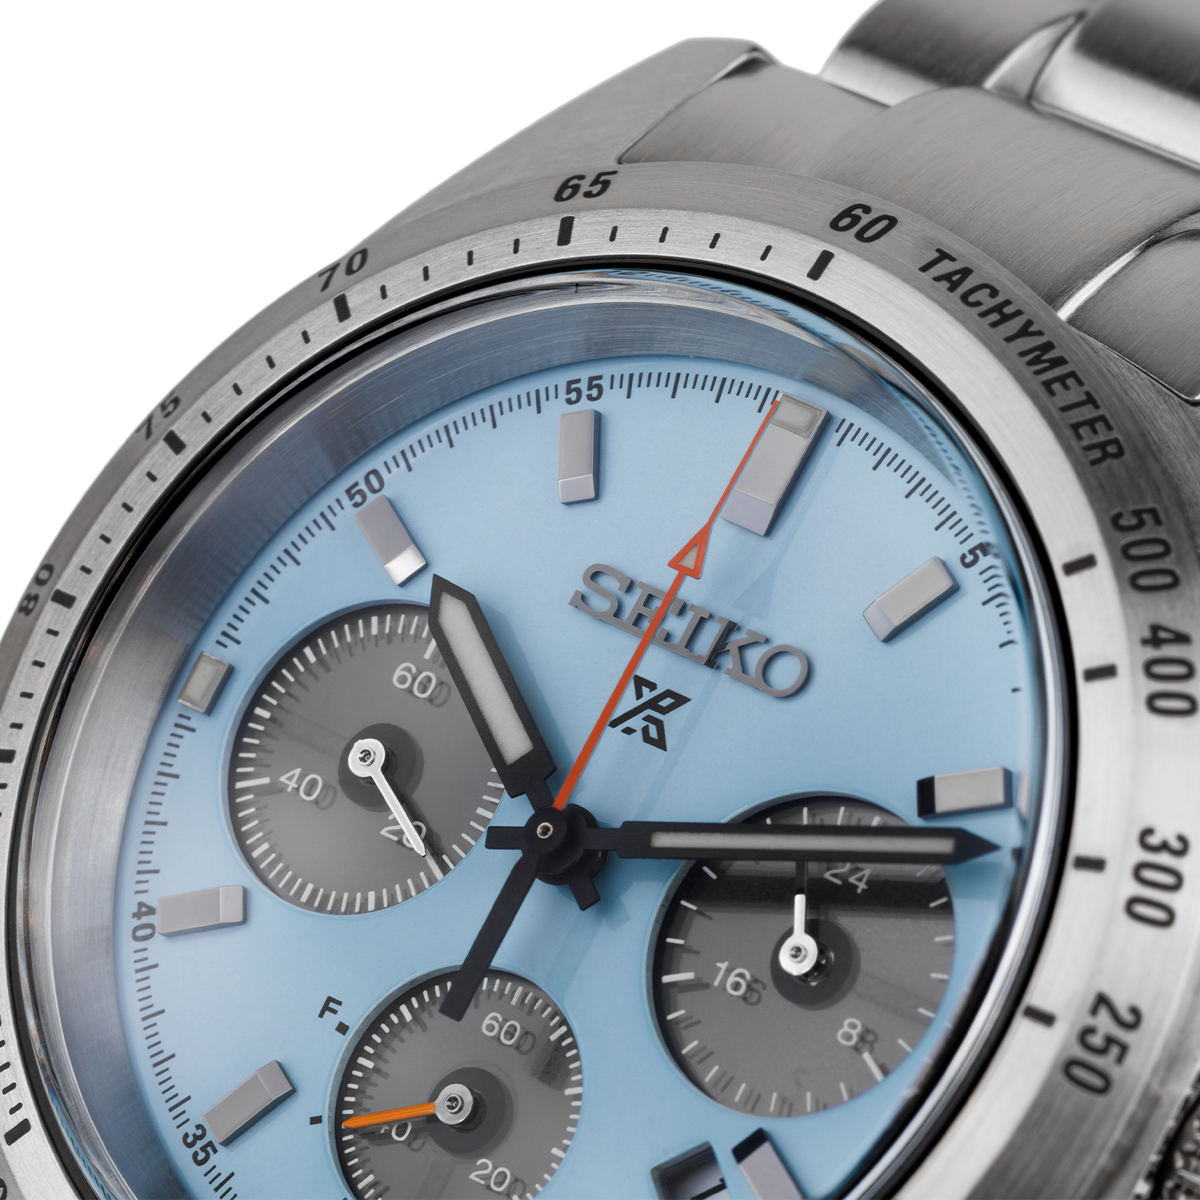 Odkryj zegarek męski Seiko Prospex Speedtimer 1/100 Sec Solar Chronograph SI SFJ003P1 z mechanizmem solarnym, chronografem oraz oryginalną tarczą